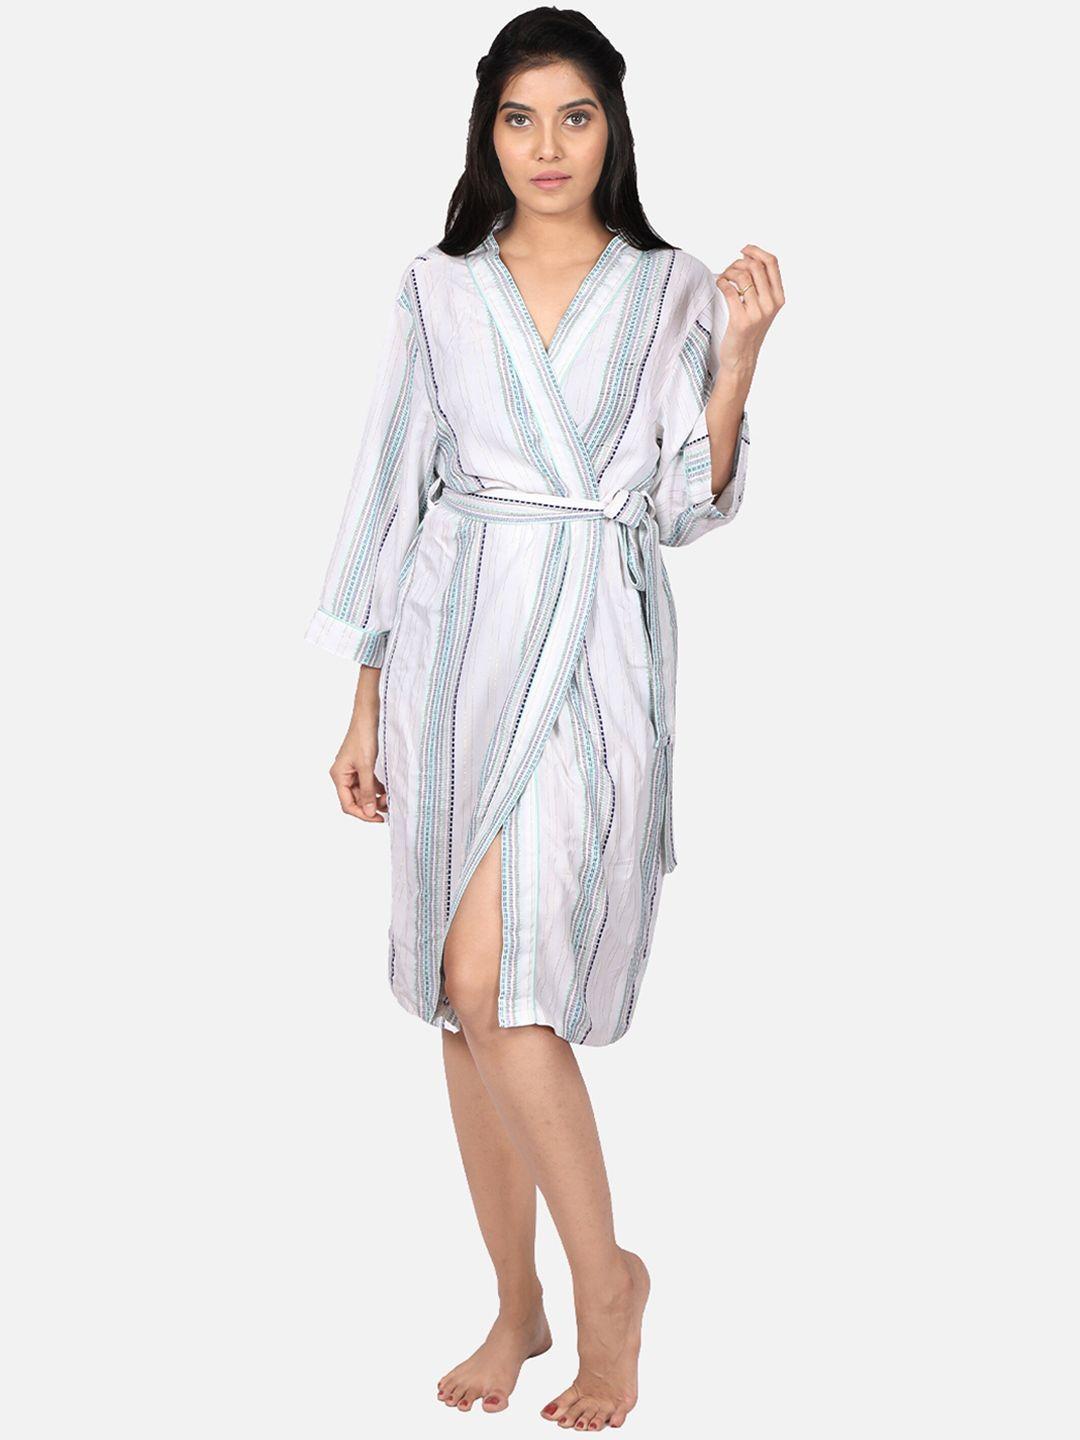 bstories women white & striped cotton bath robe